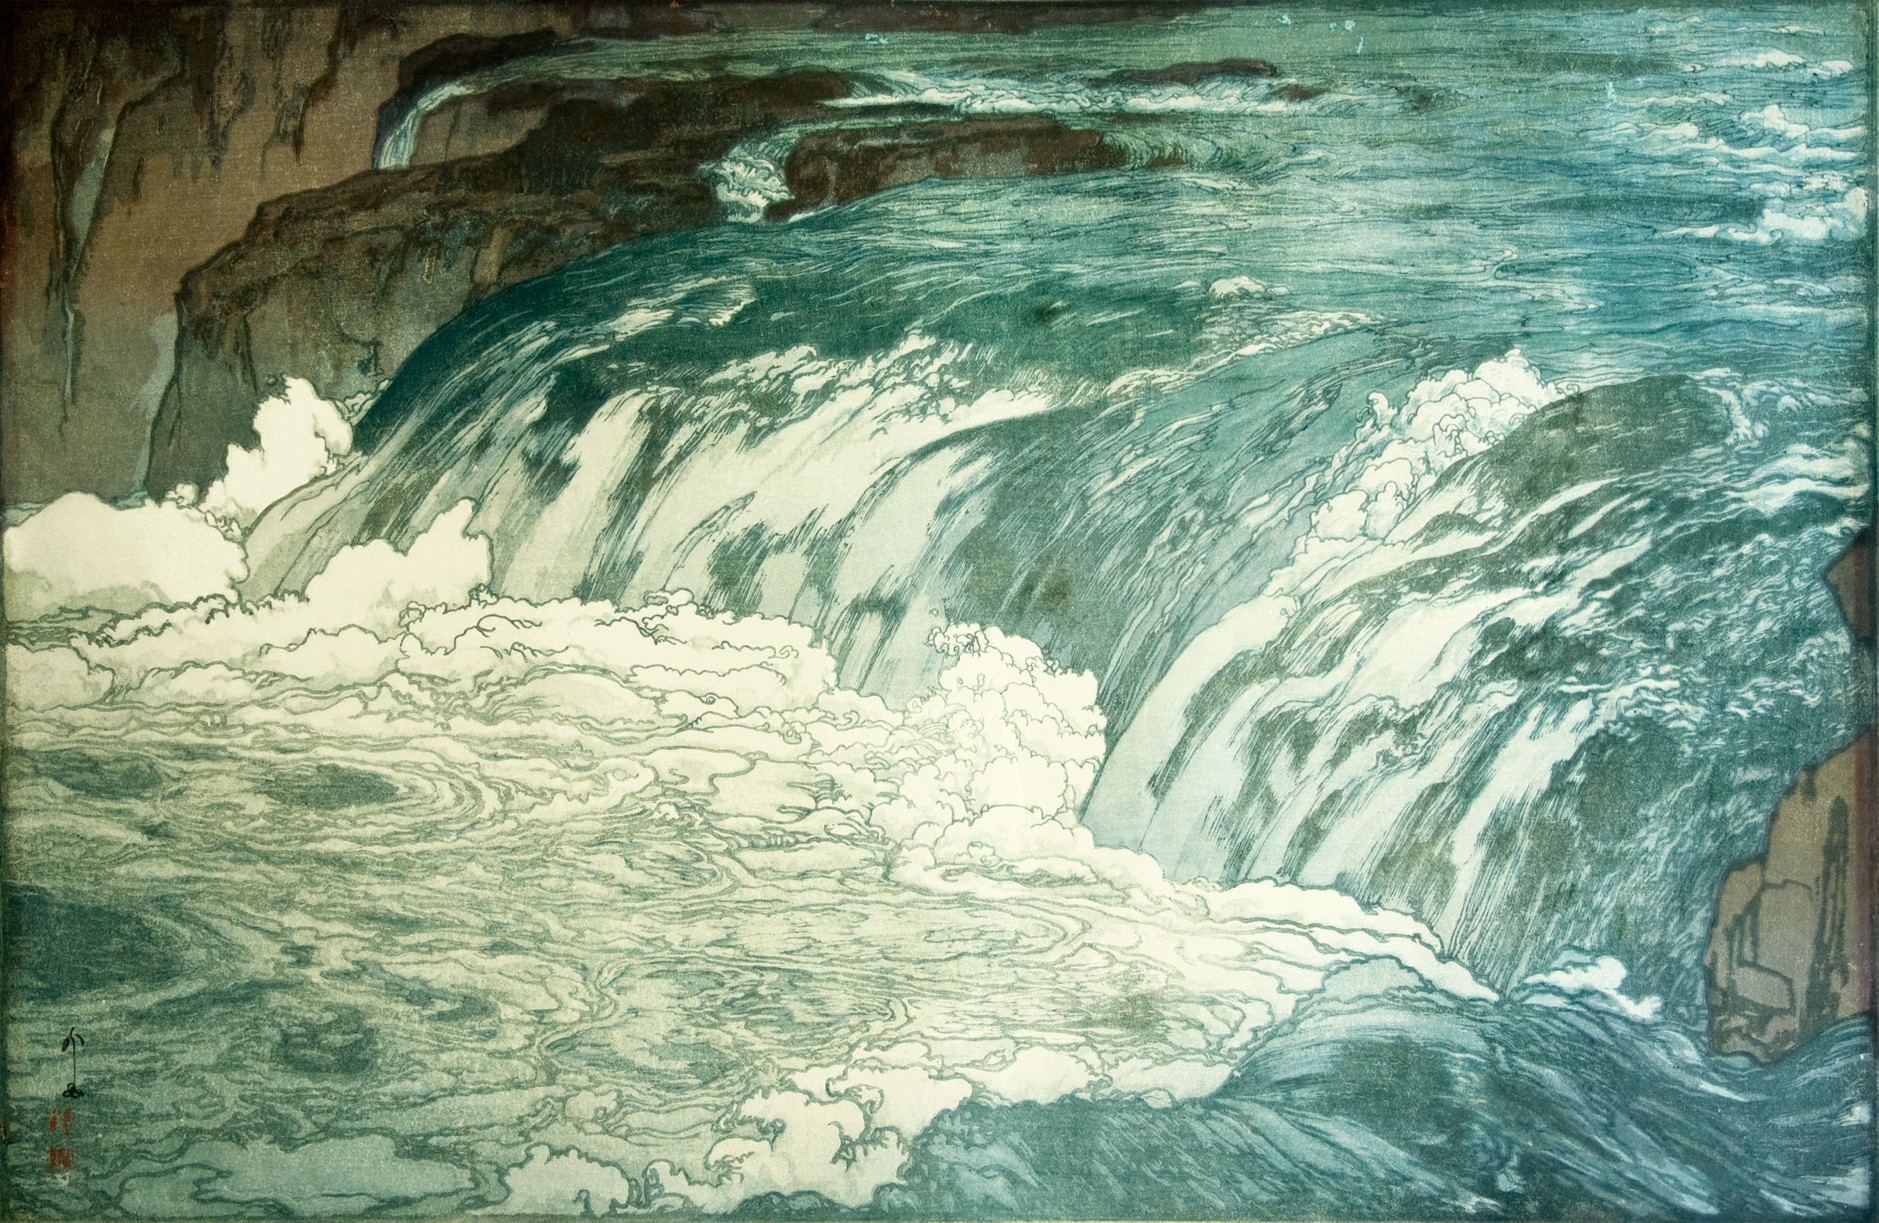 Yoshida Hiroshi, Japanese, Artwork, Painting, River, Water Wallpaper